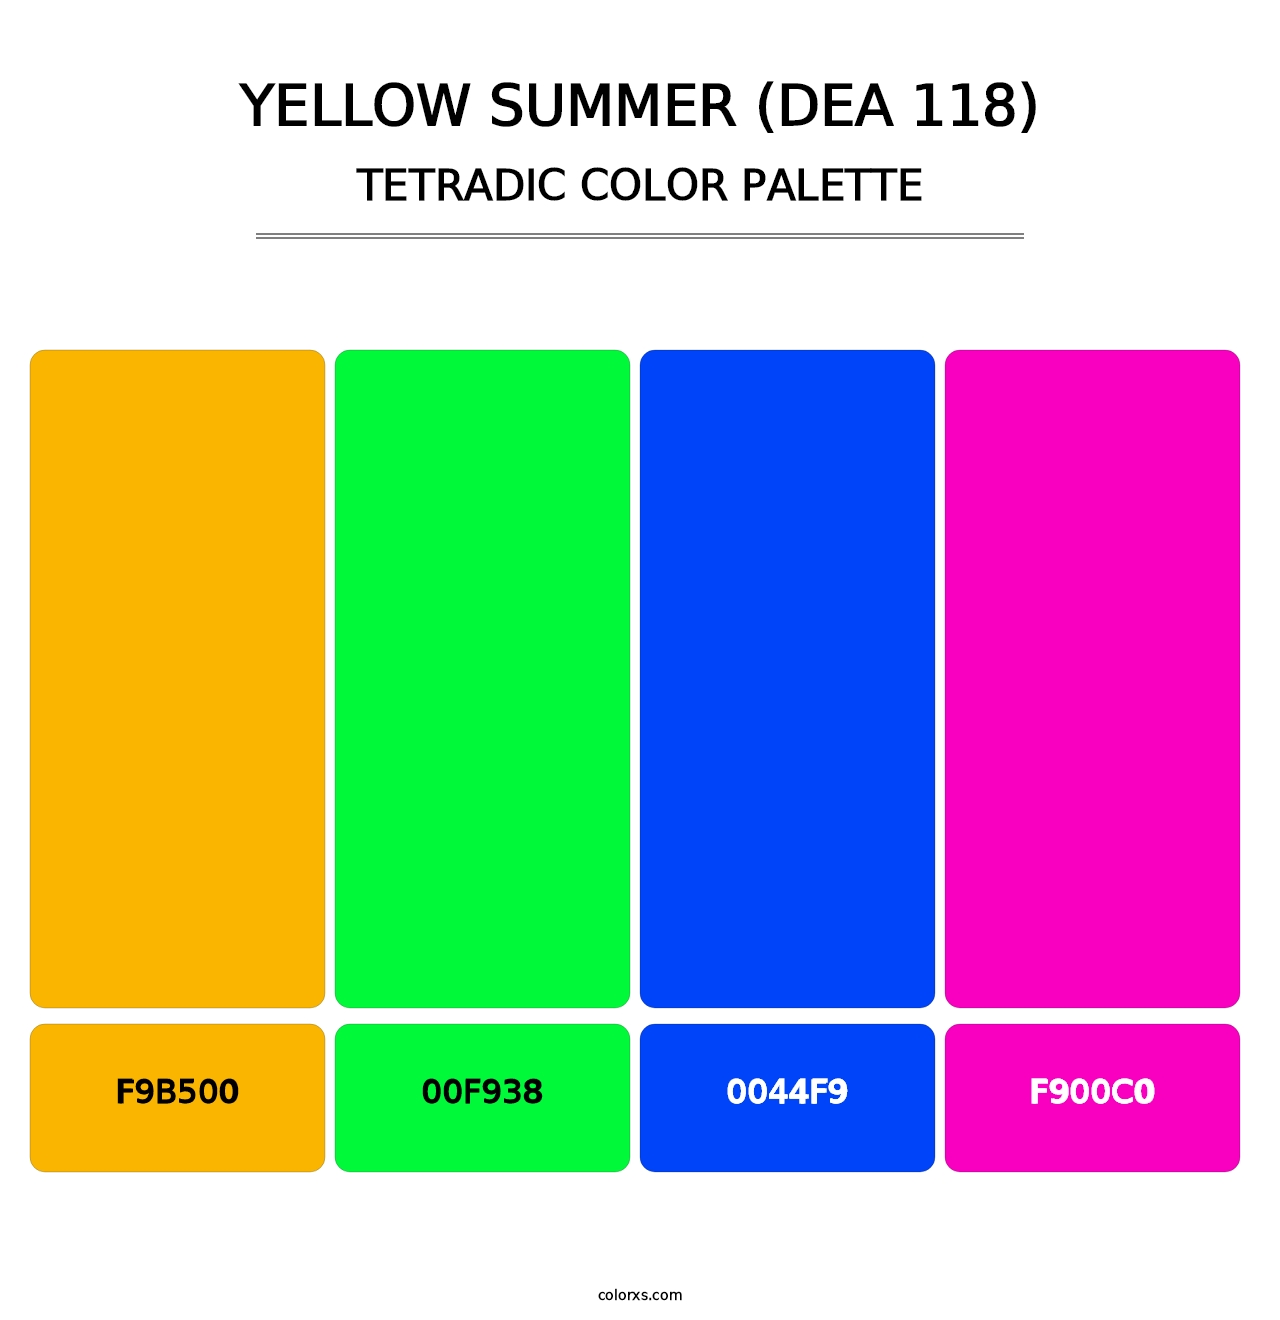 Yellow Summer (DEA 118) - Tetradic Color Palette